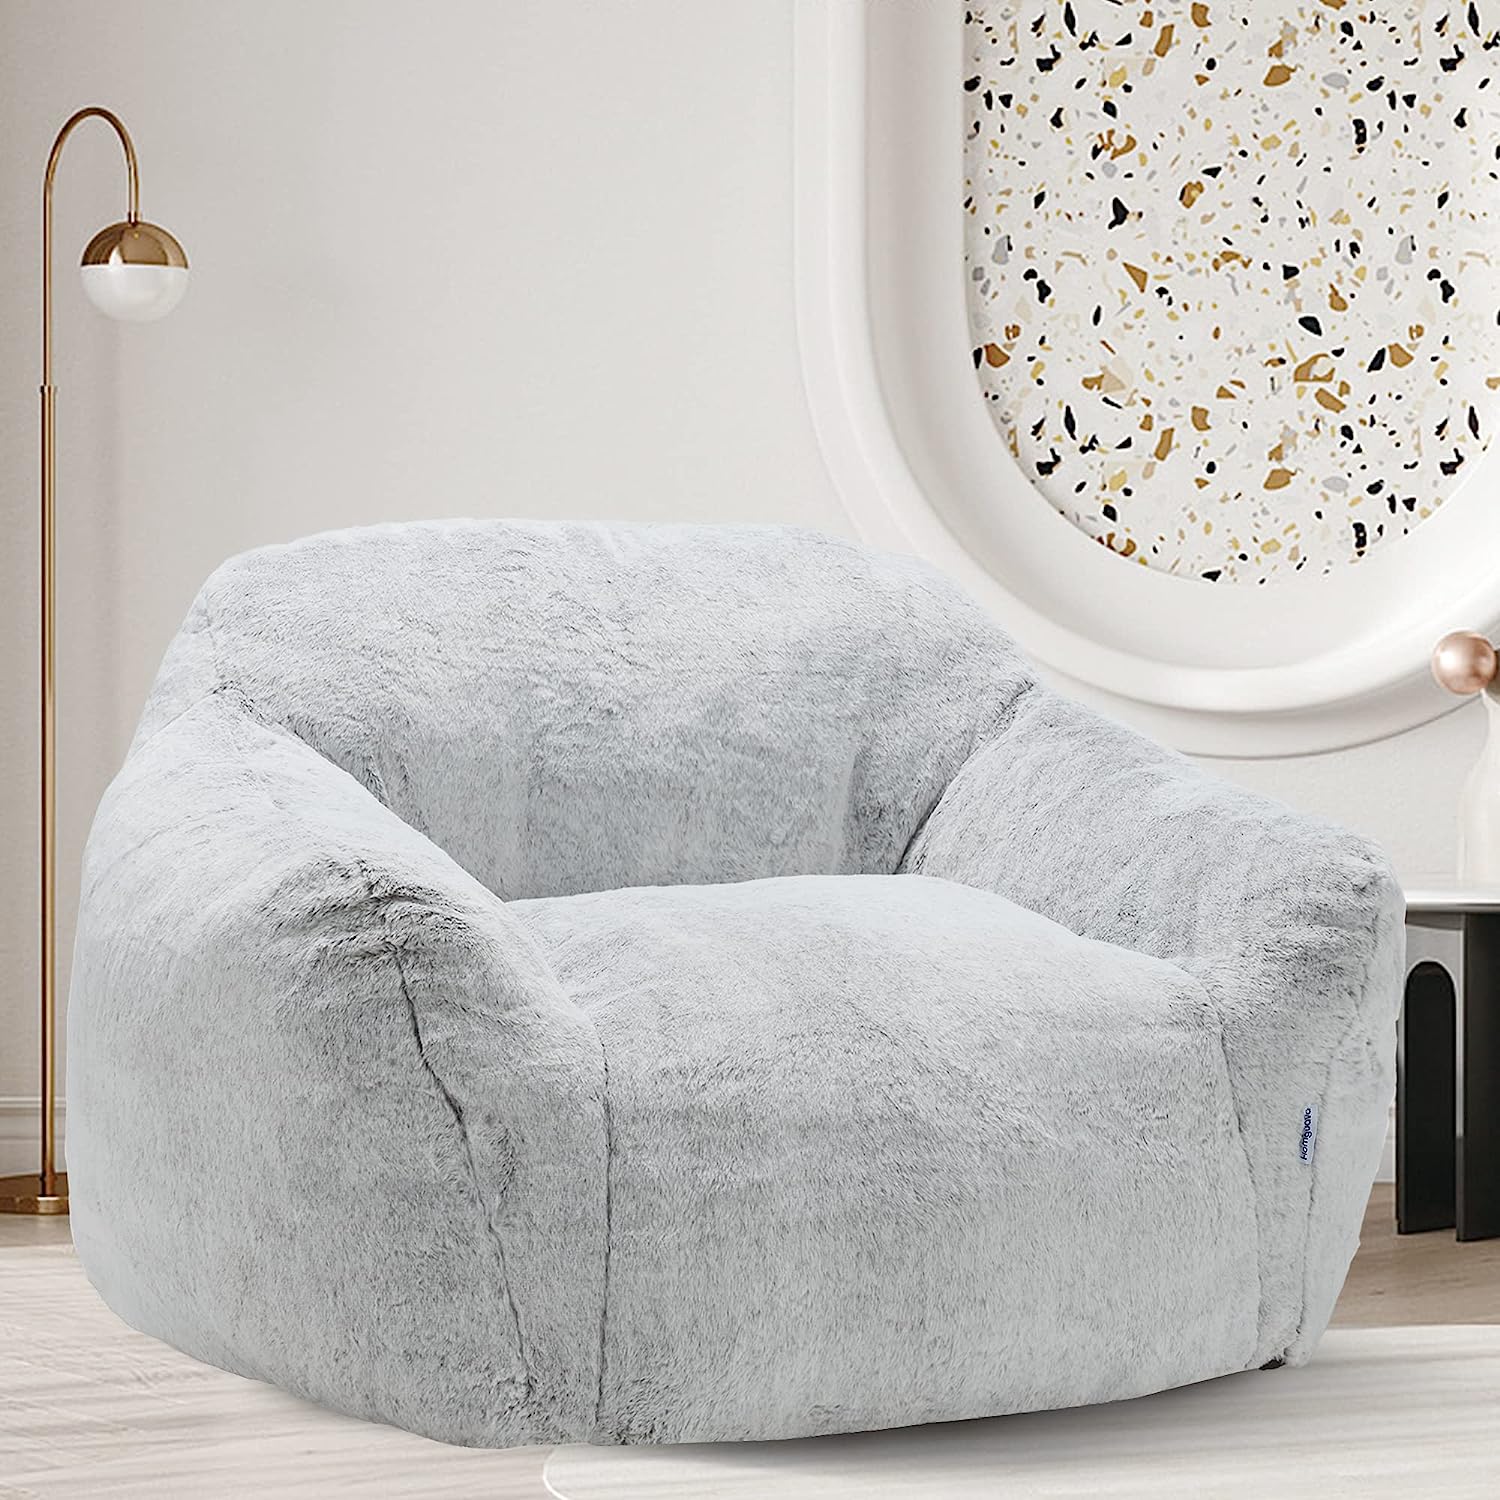 Homguava Giant Bean Bag Chair Sofa High-Density Foam [...]